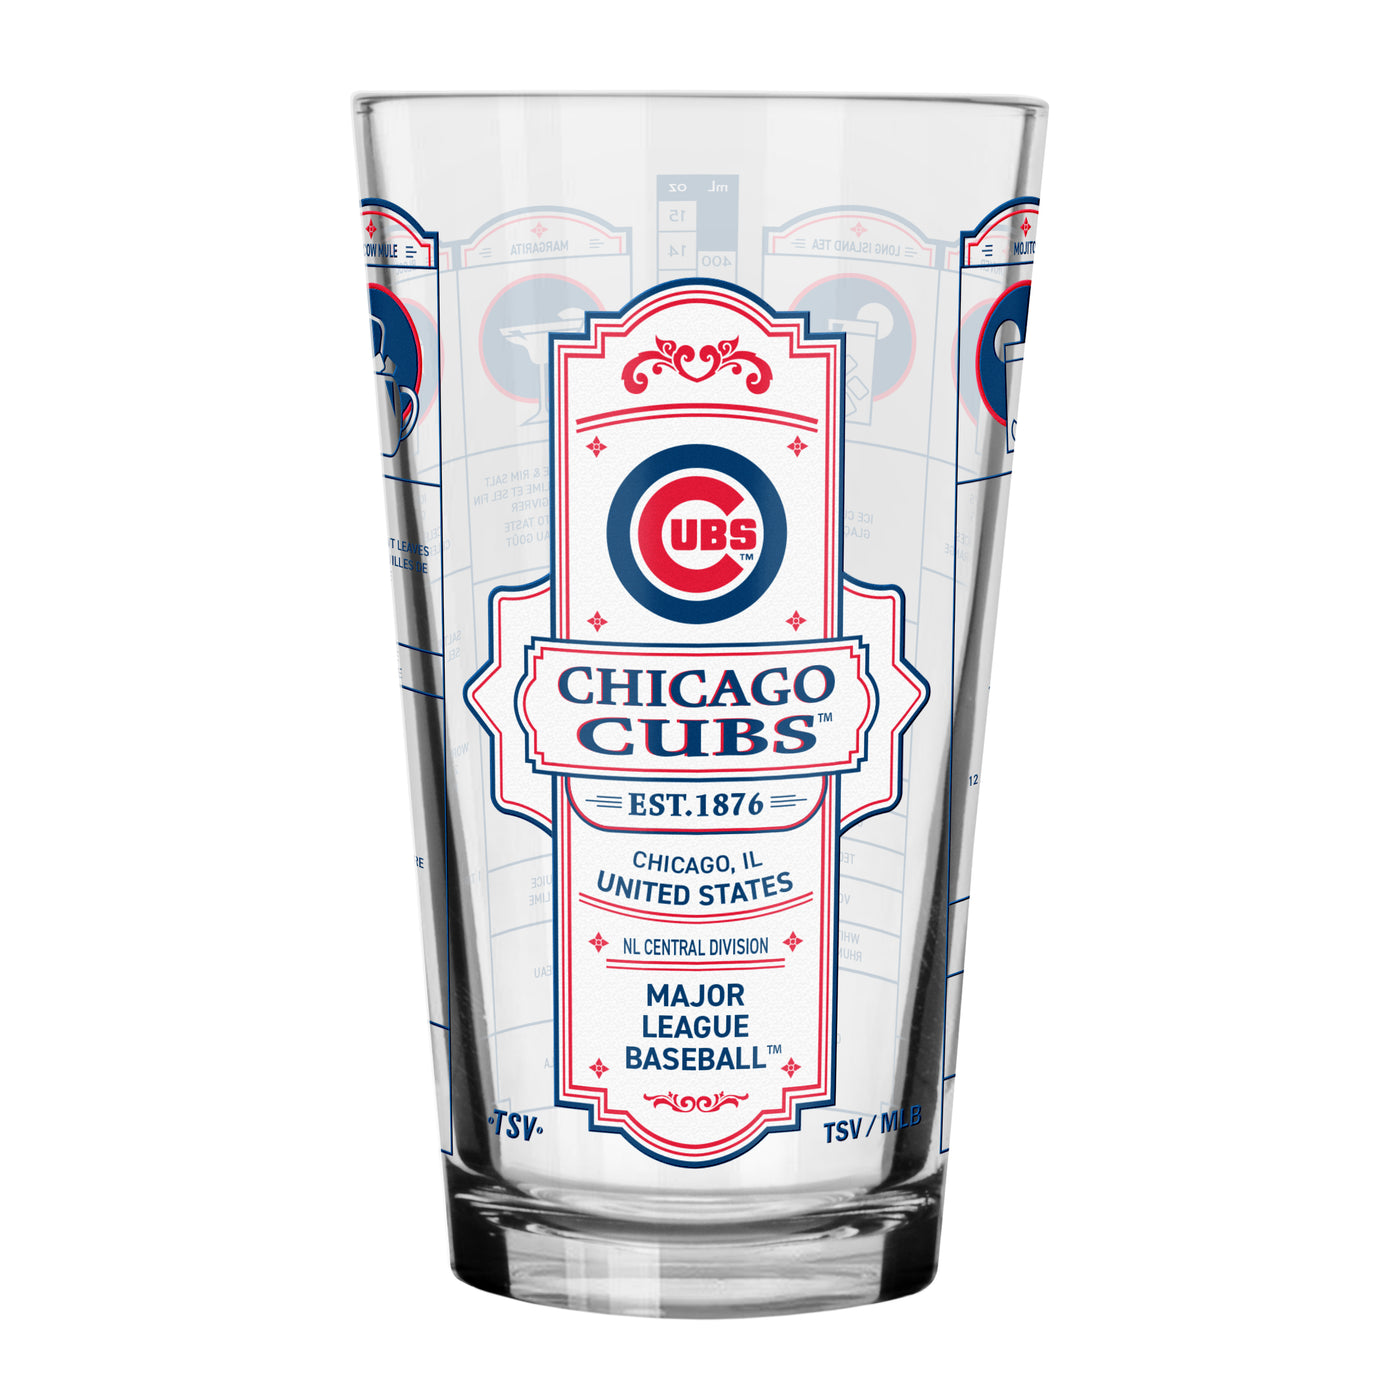 CHICAGO CUBS BULLSEYE LOGO BARTENDER PINT GLASS